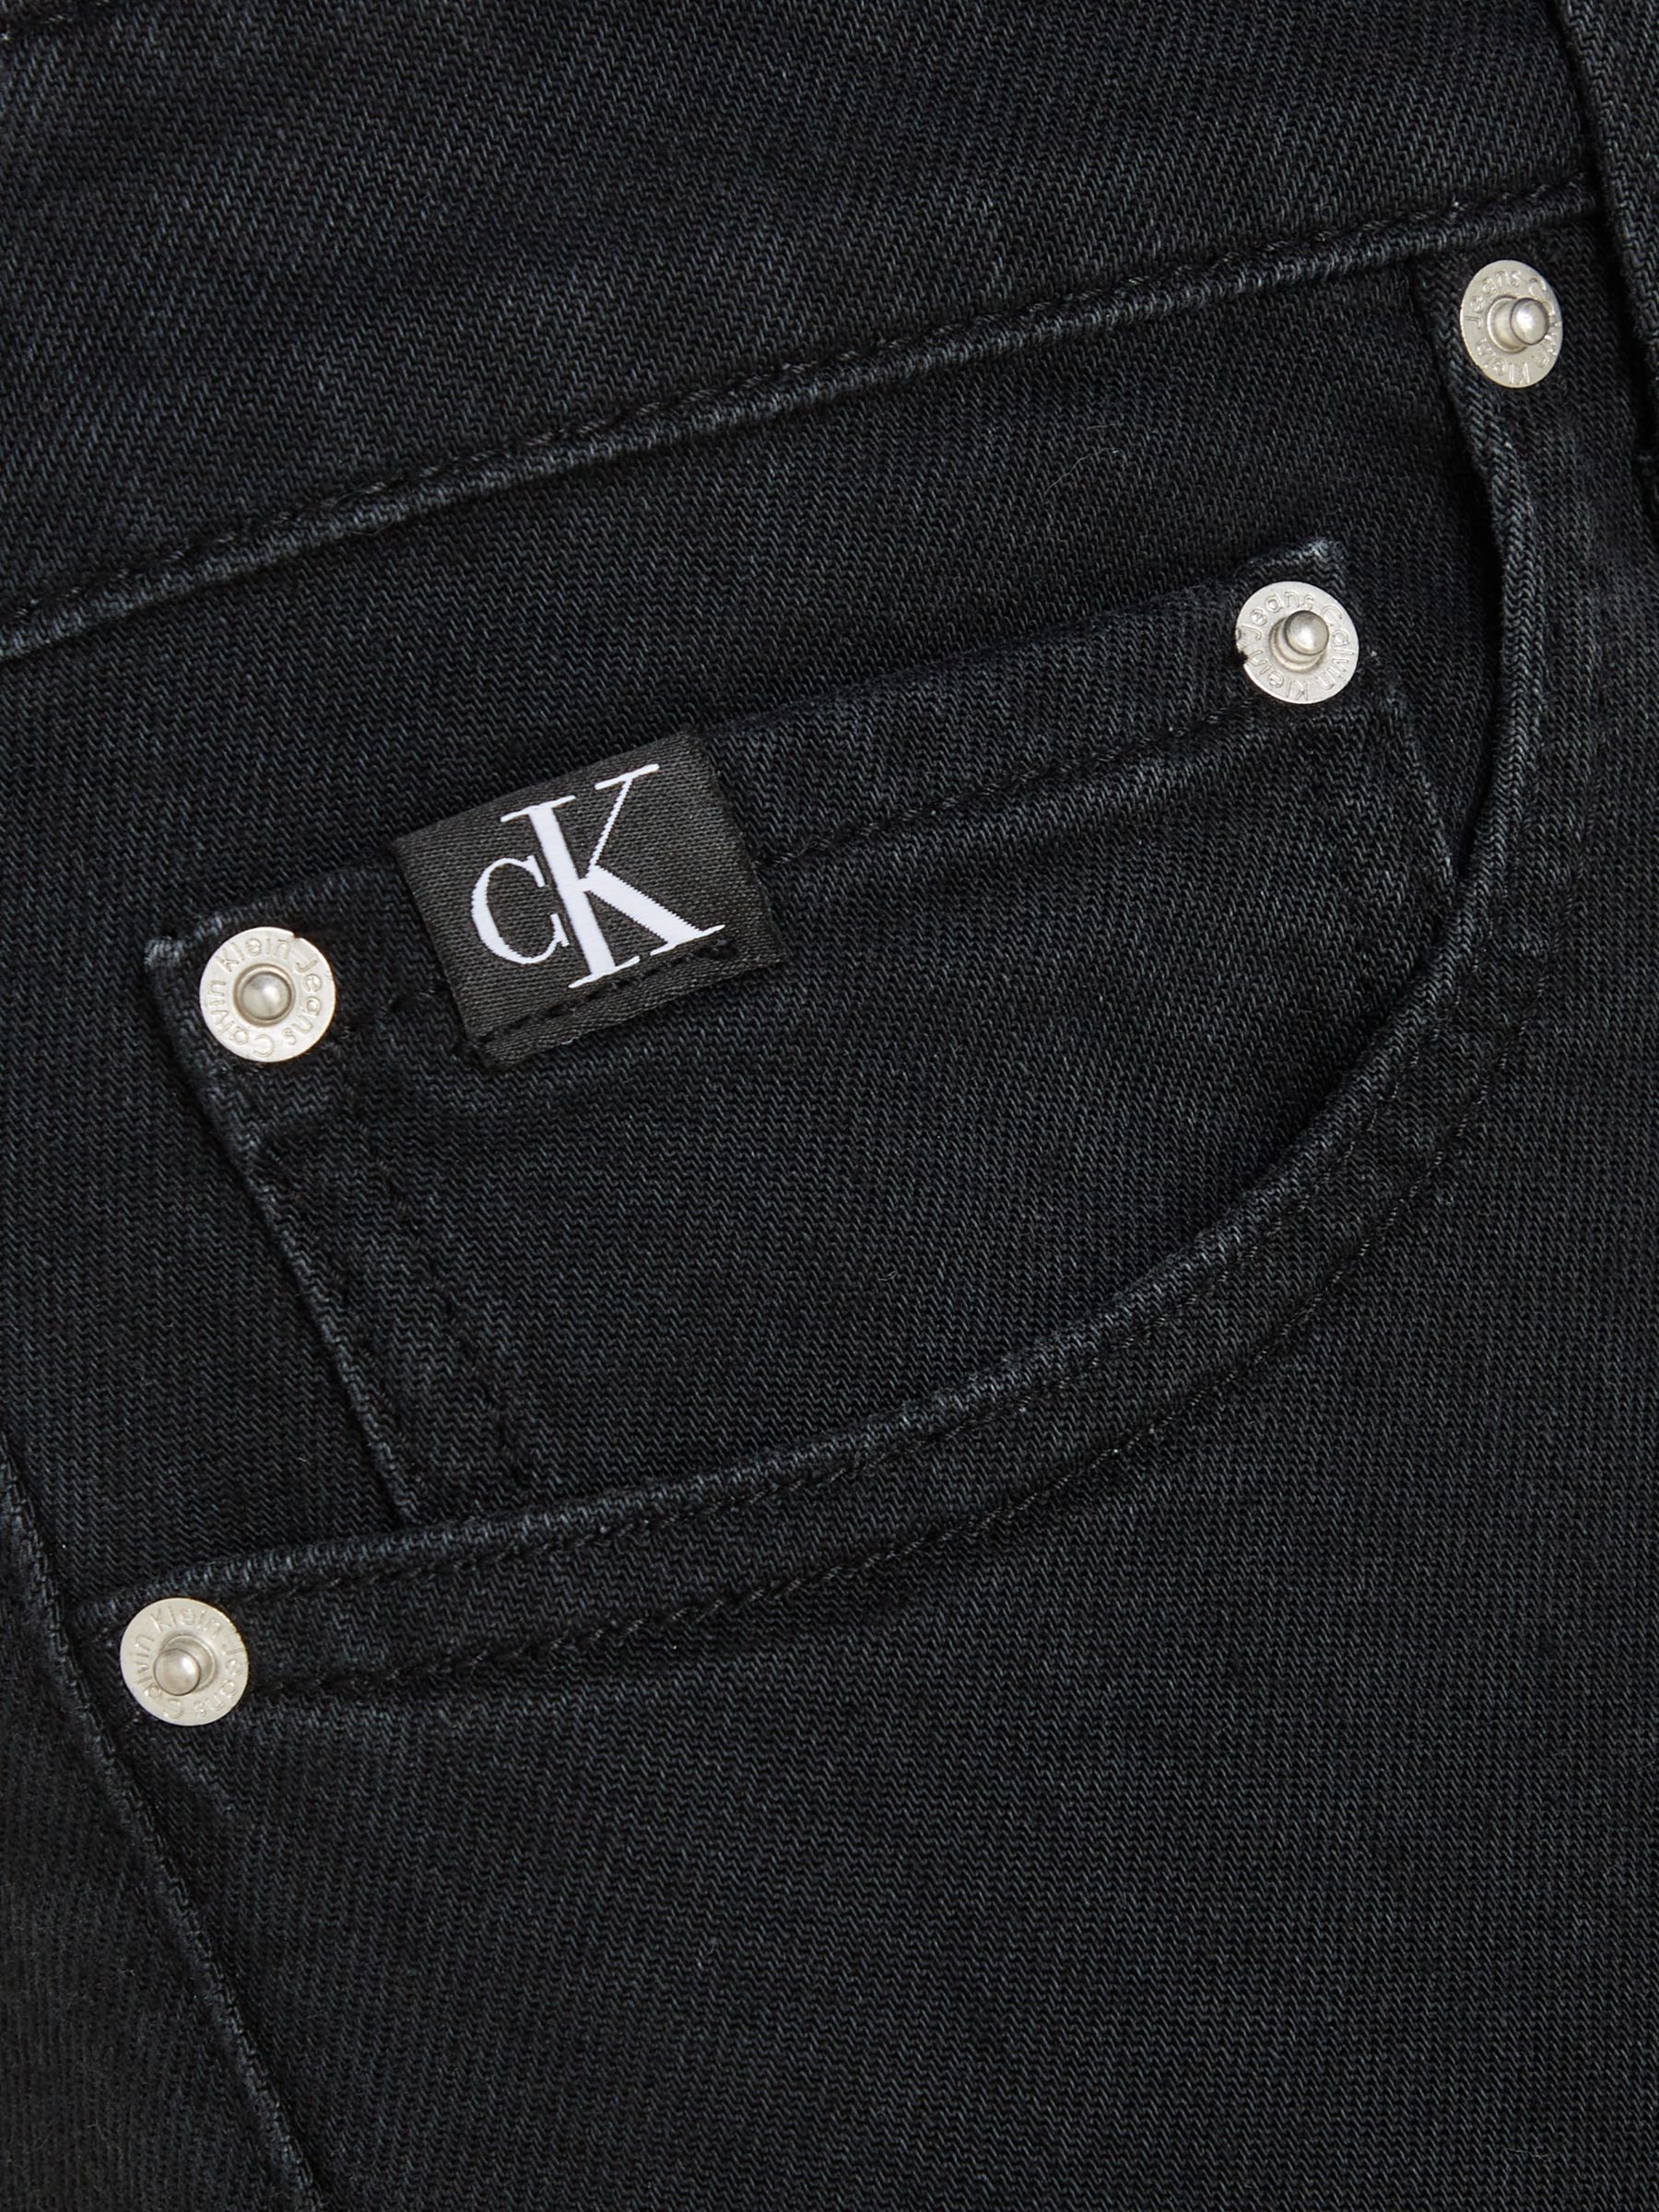 Calvin Klein Slim Fit Jeans, Denim Black at John Lewis & Partners